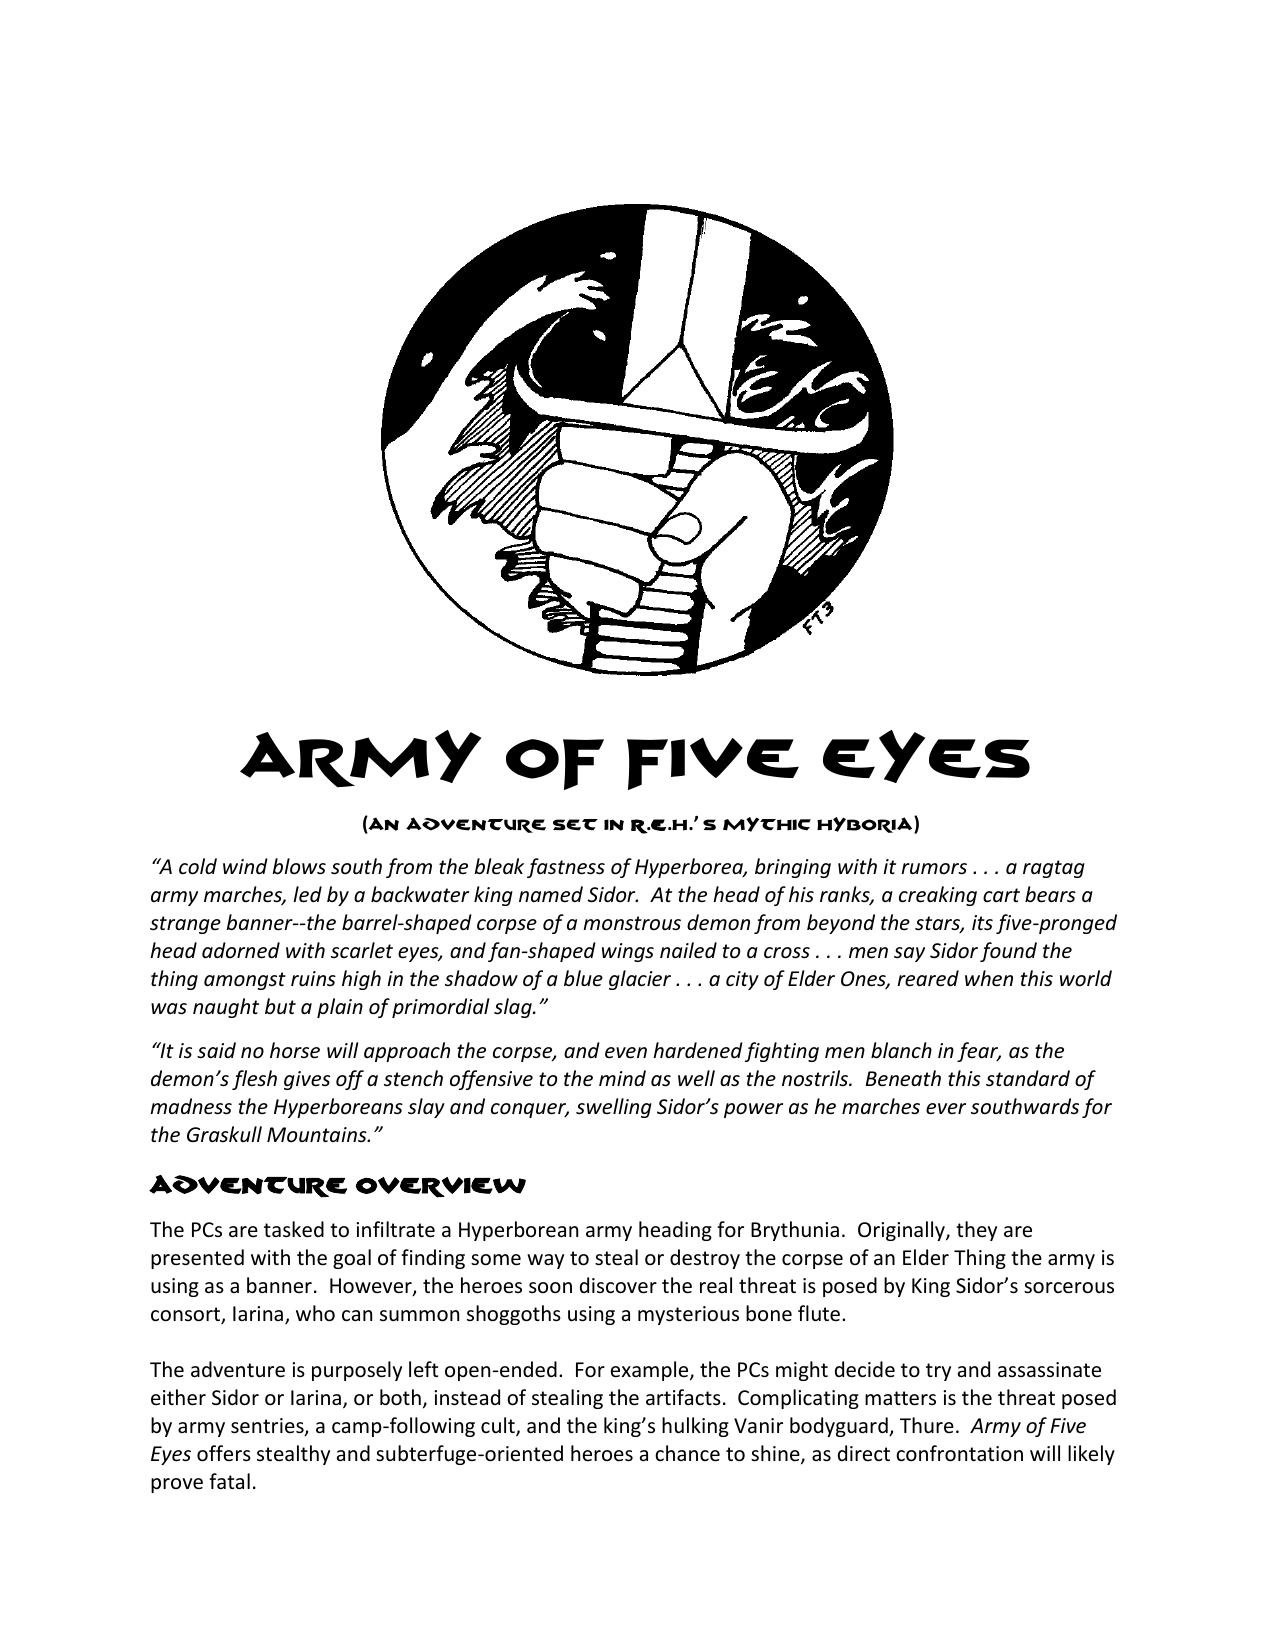 Army of Five Eyes (BoL)